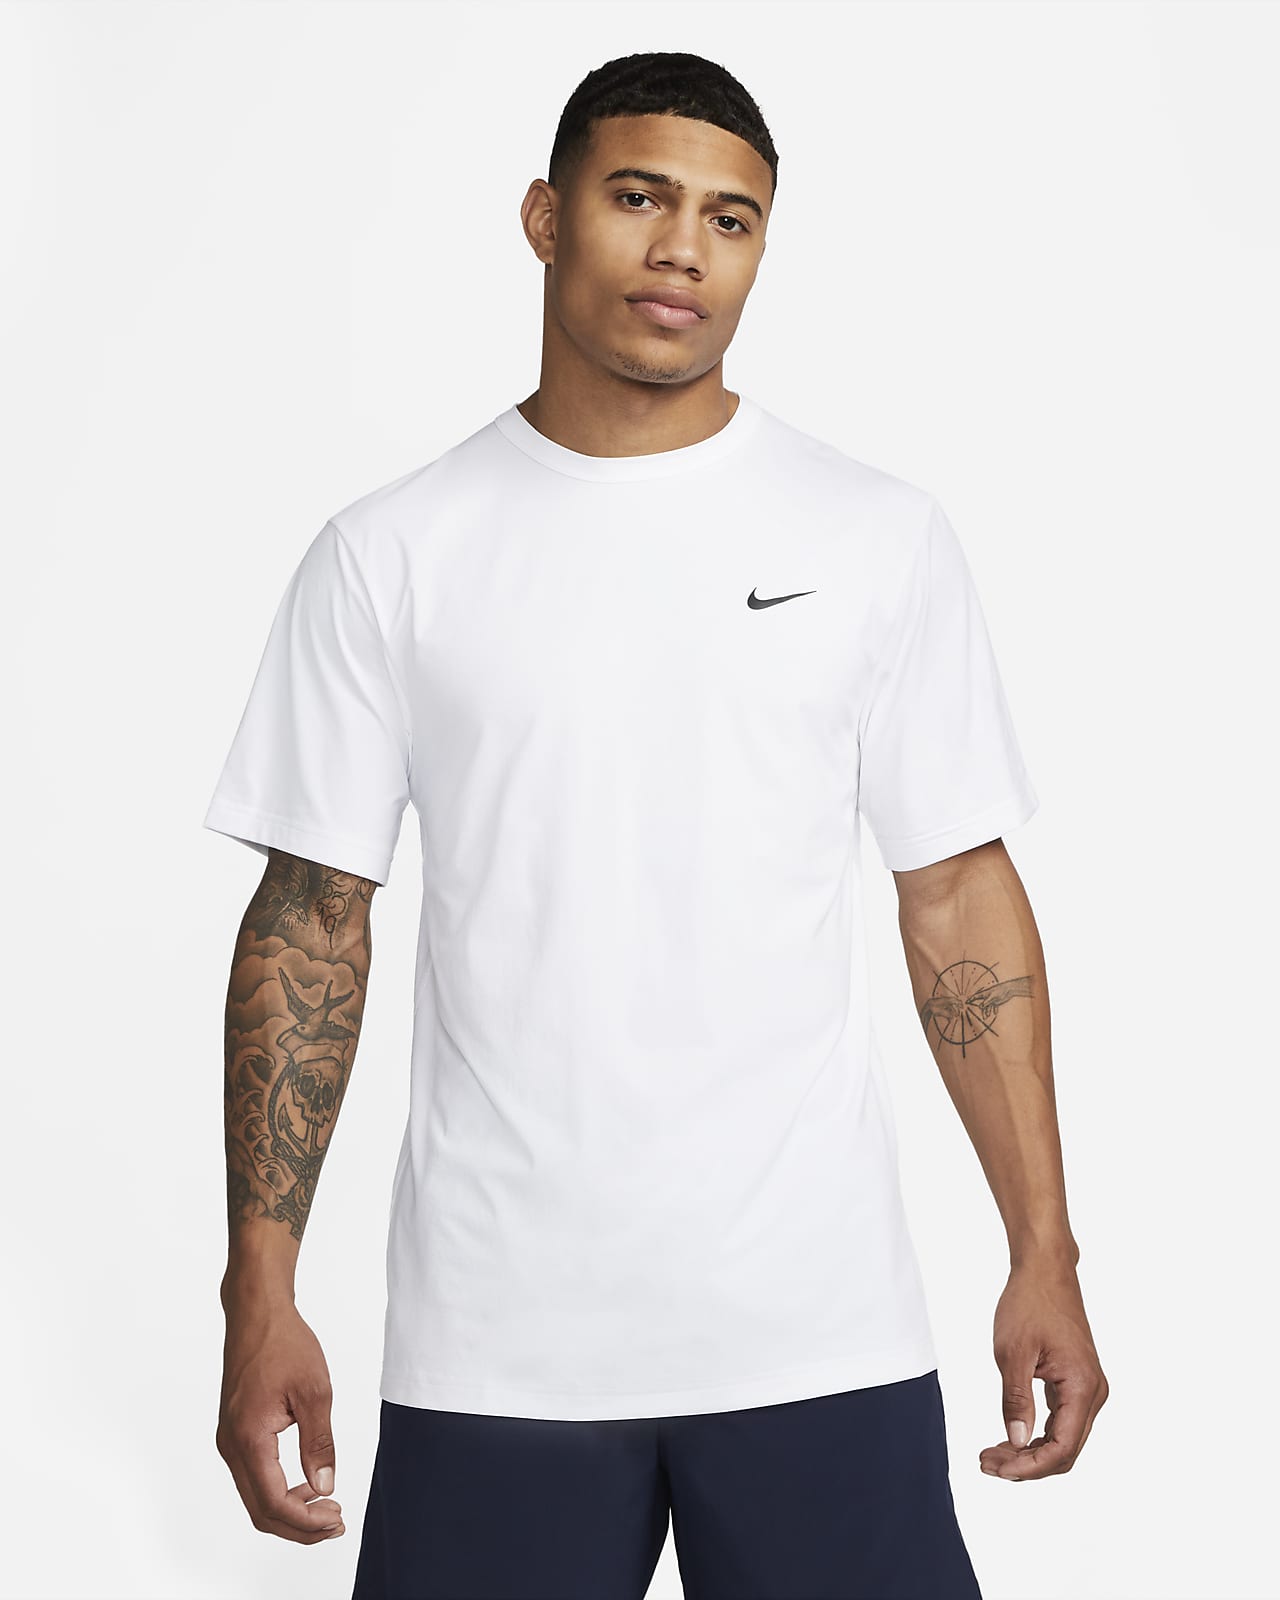 Nike Hyverse Men's Dri-FIT UV Short-sleeve Versatile Top